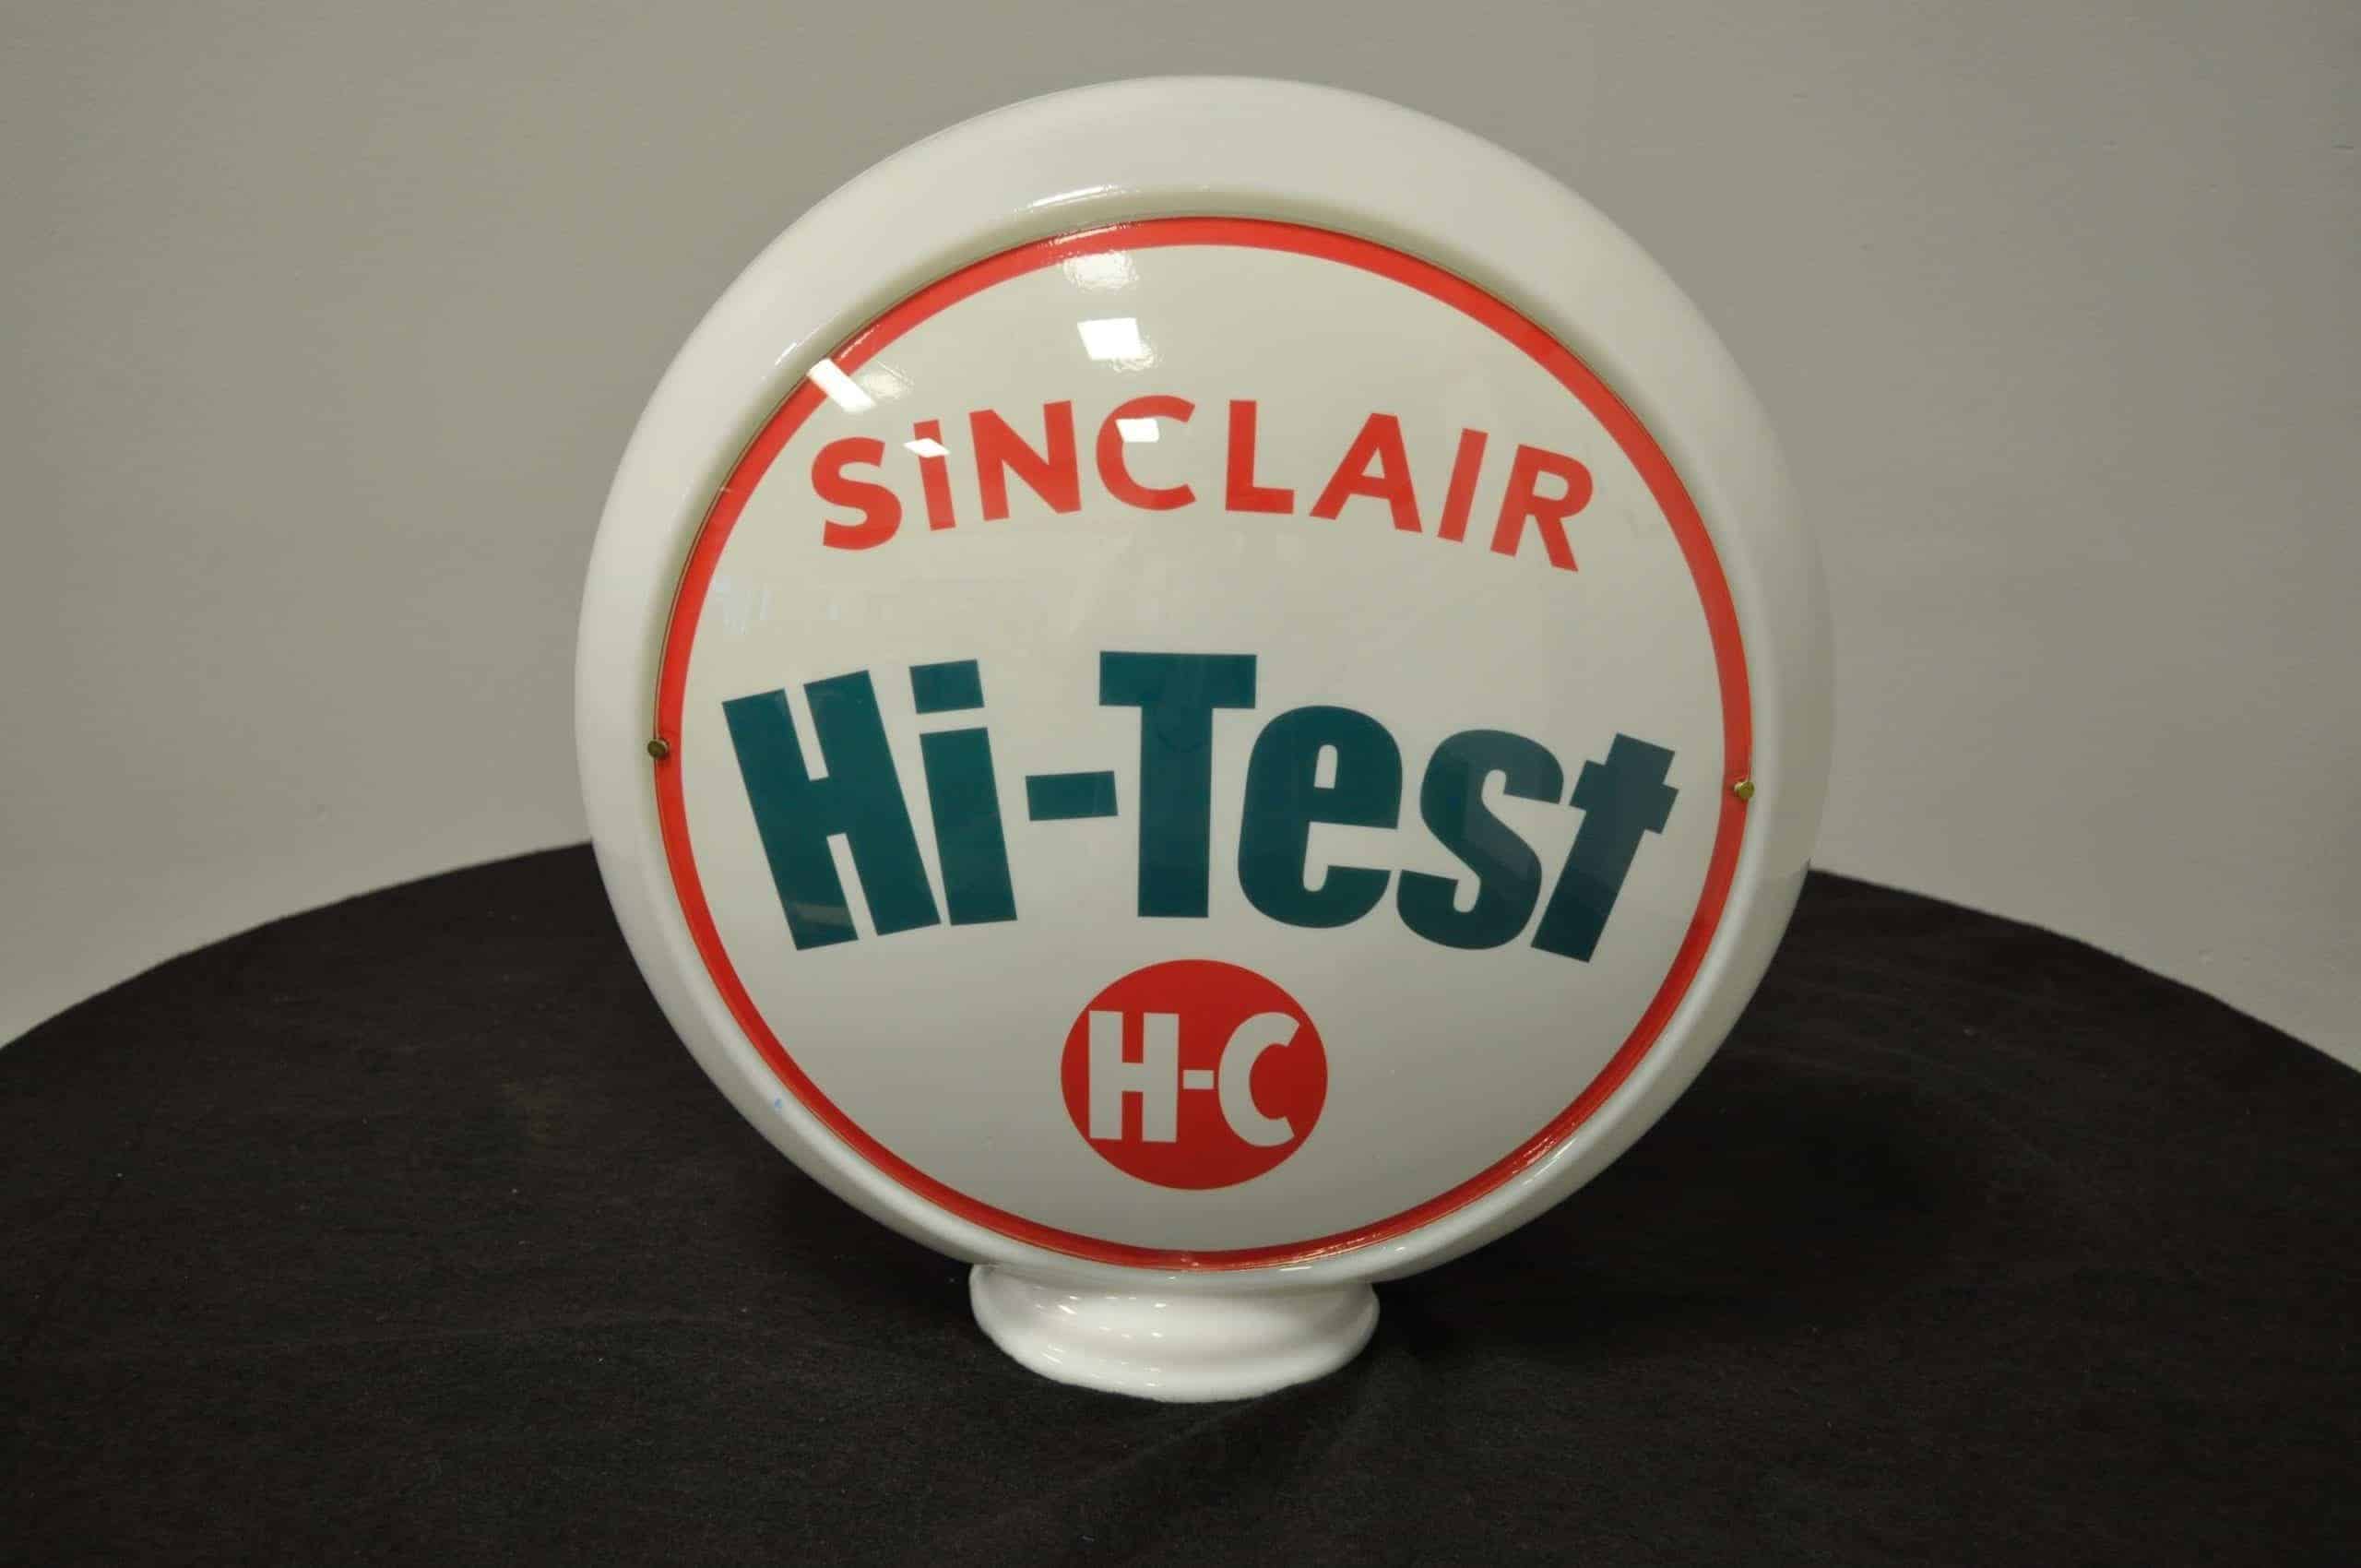 Sinclair Hi-test H-C Glass Globe